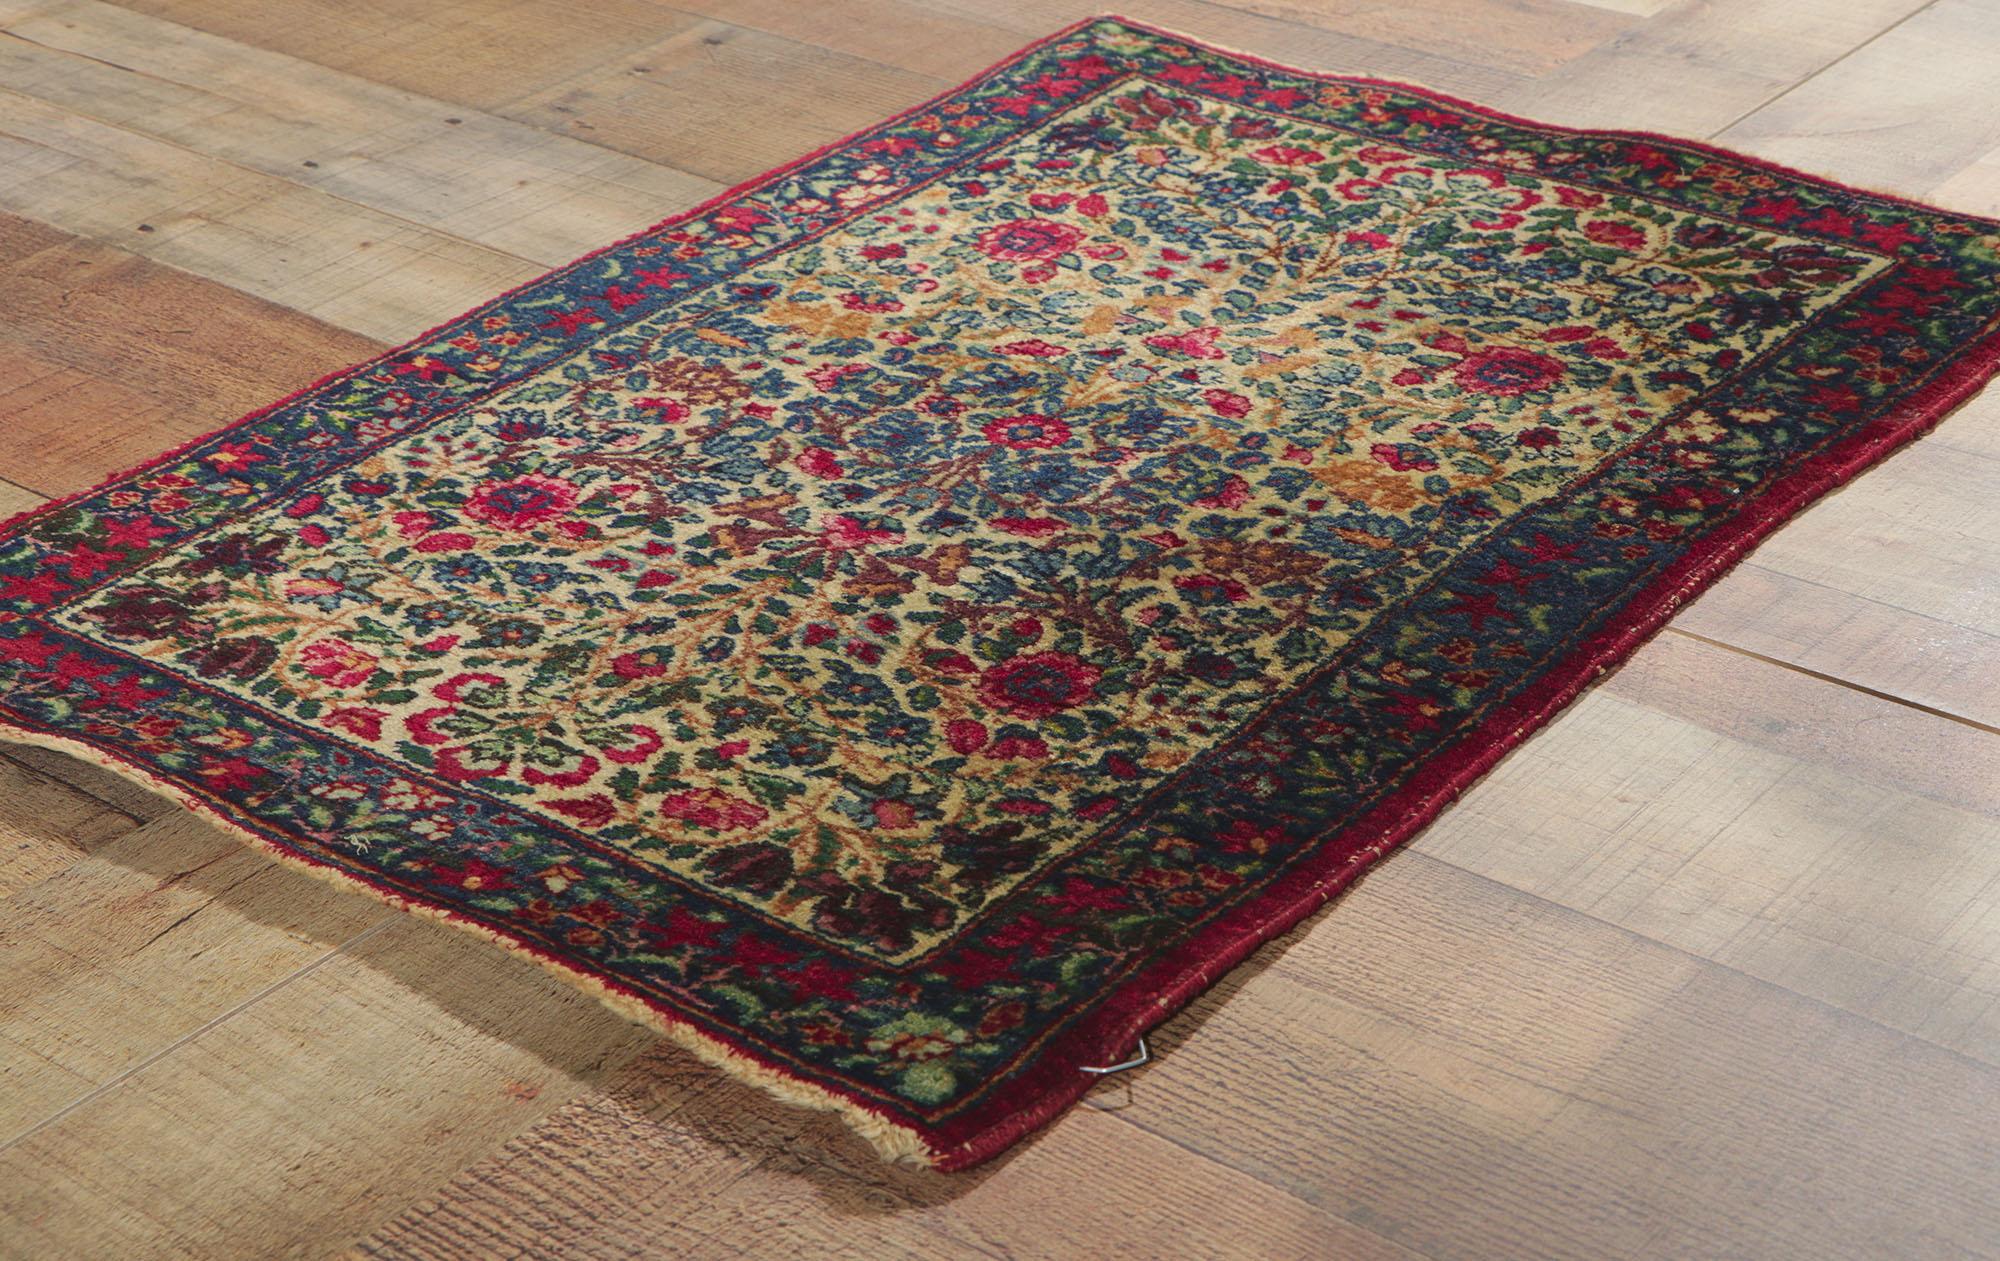 Antique Persian Kerman Carpet In Good Condition For Sale In Dallas, TX